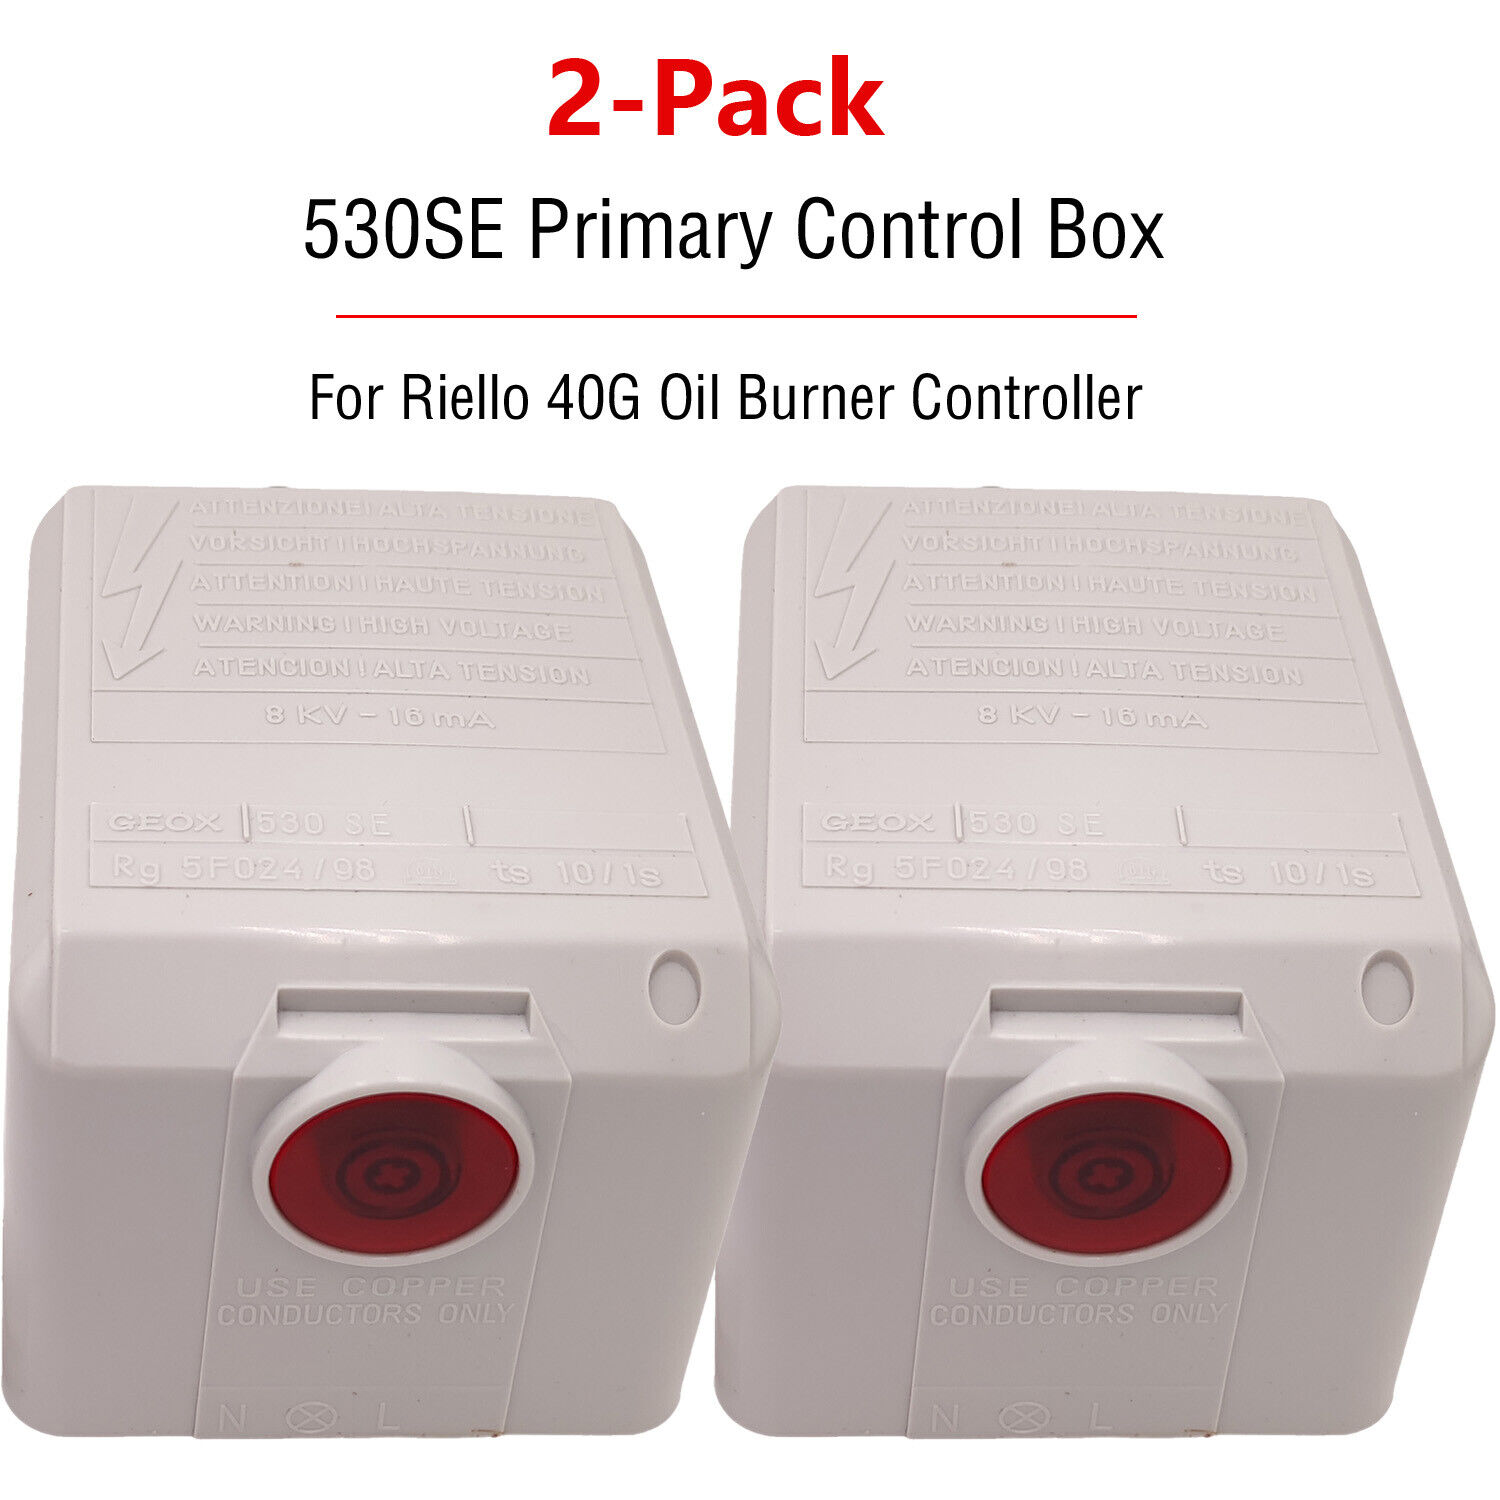 2x 530SE Primary Control Box for Riello 40G Oil Burner Controller + Electric Eye